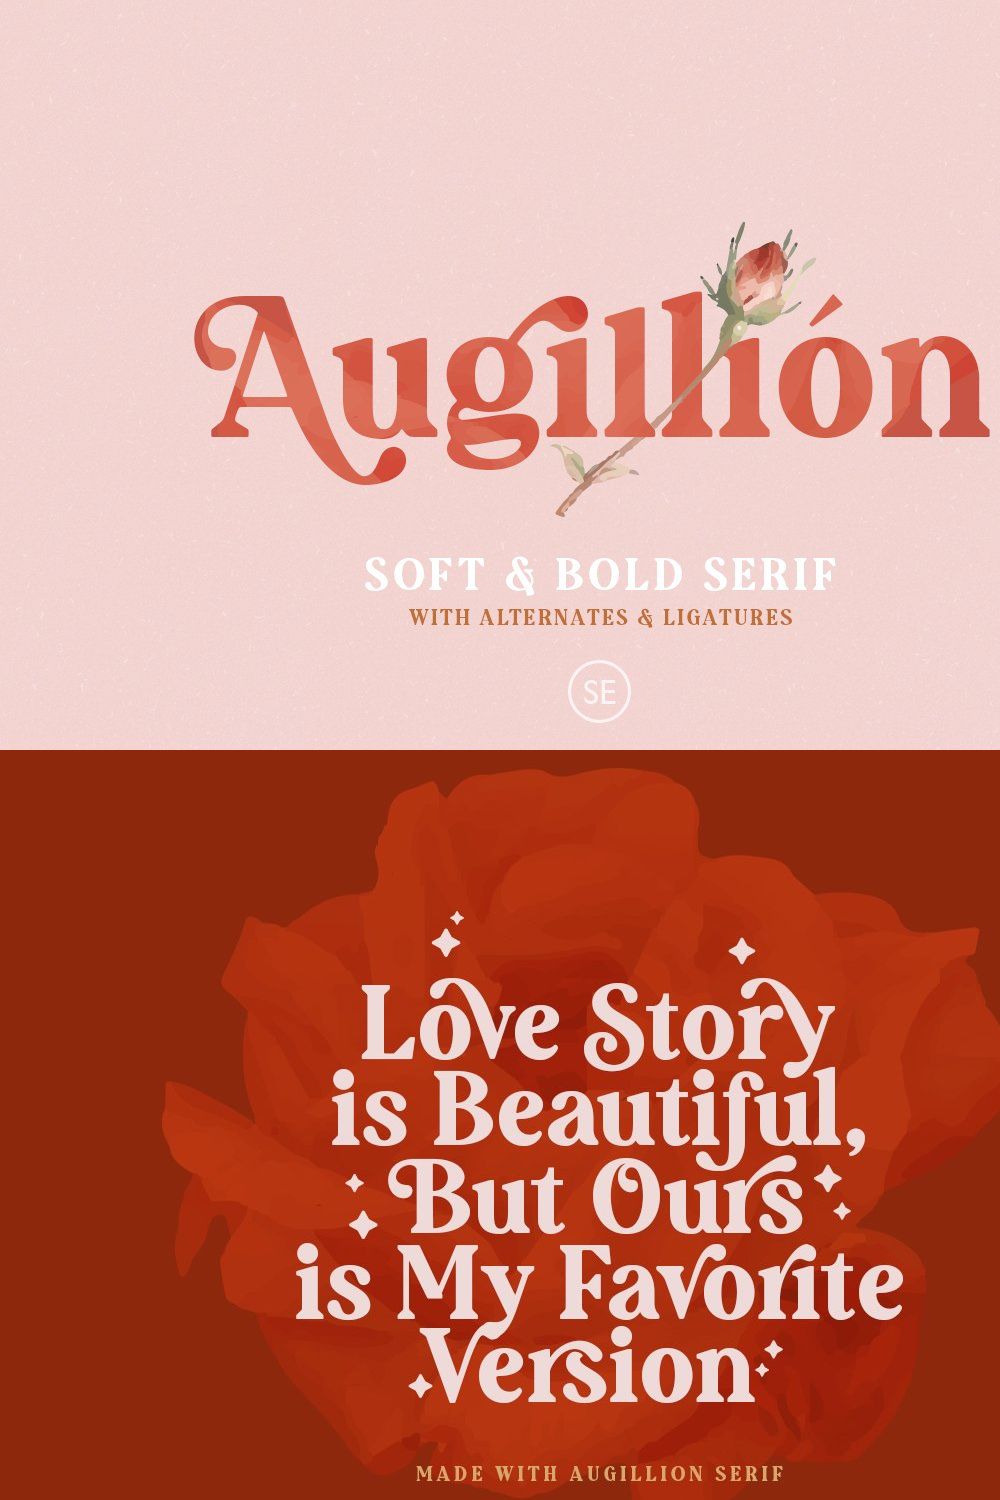 Augillion - Soft Bold Serif pinterest preview image.